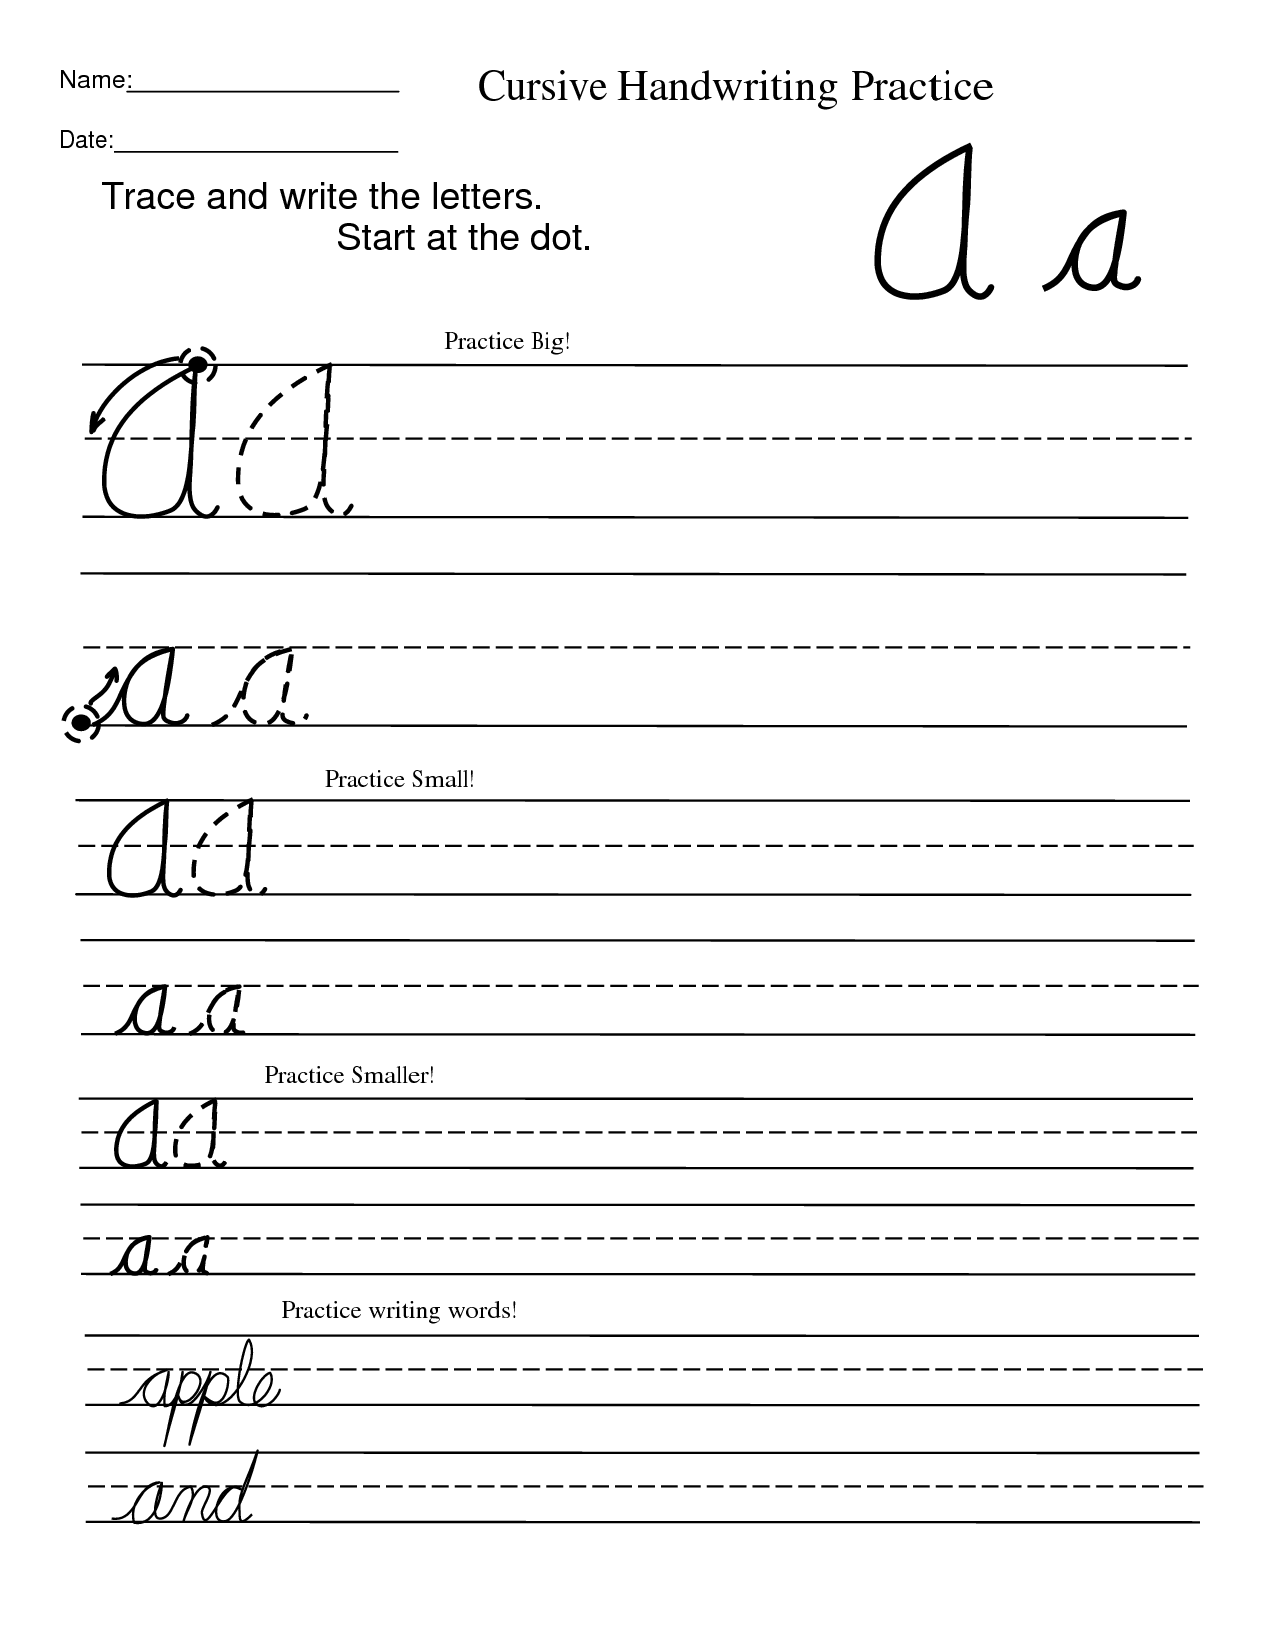 5-printable-cursive-handwriting-worksheets-for-beautiful-penmanship